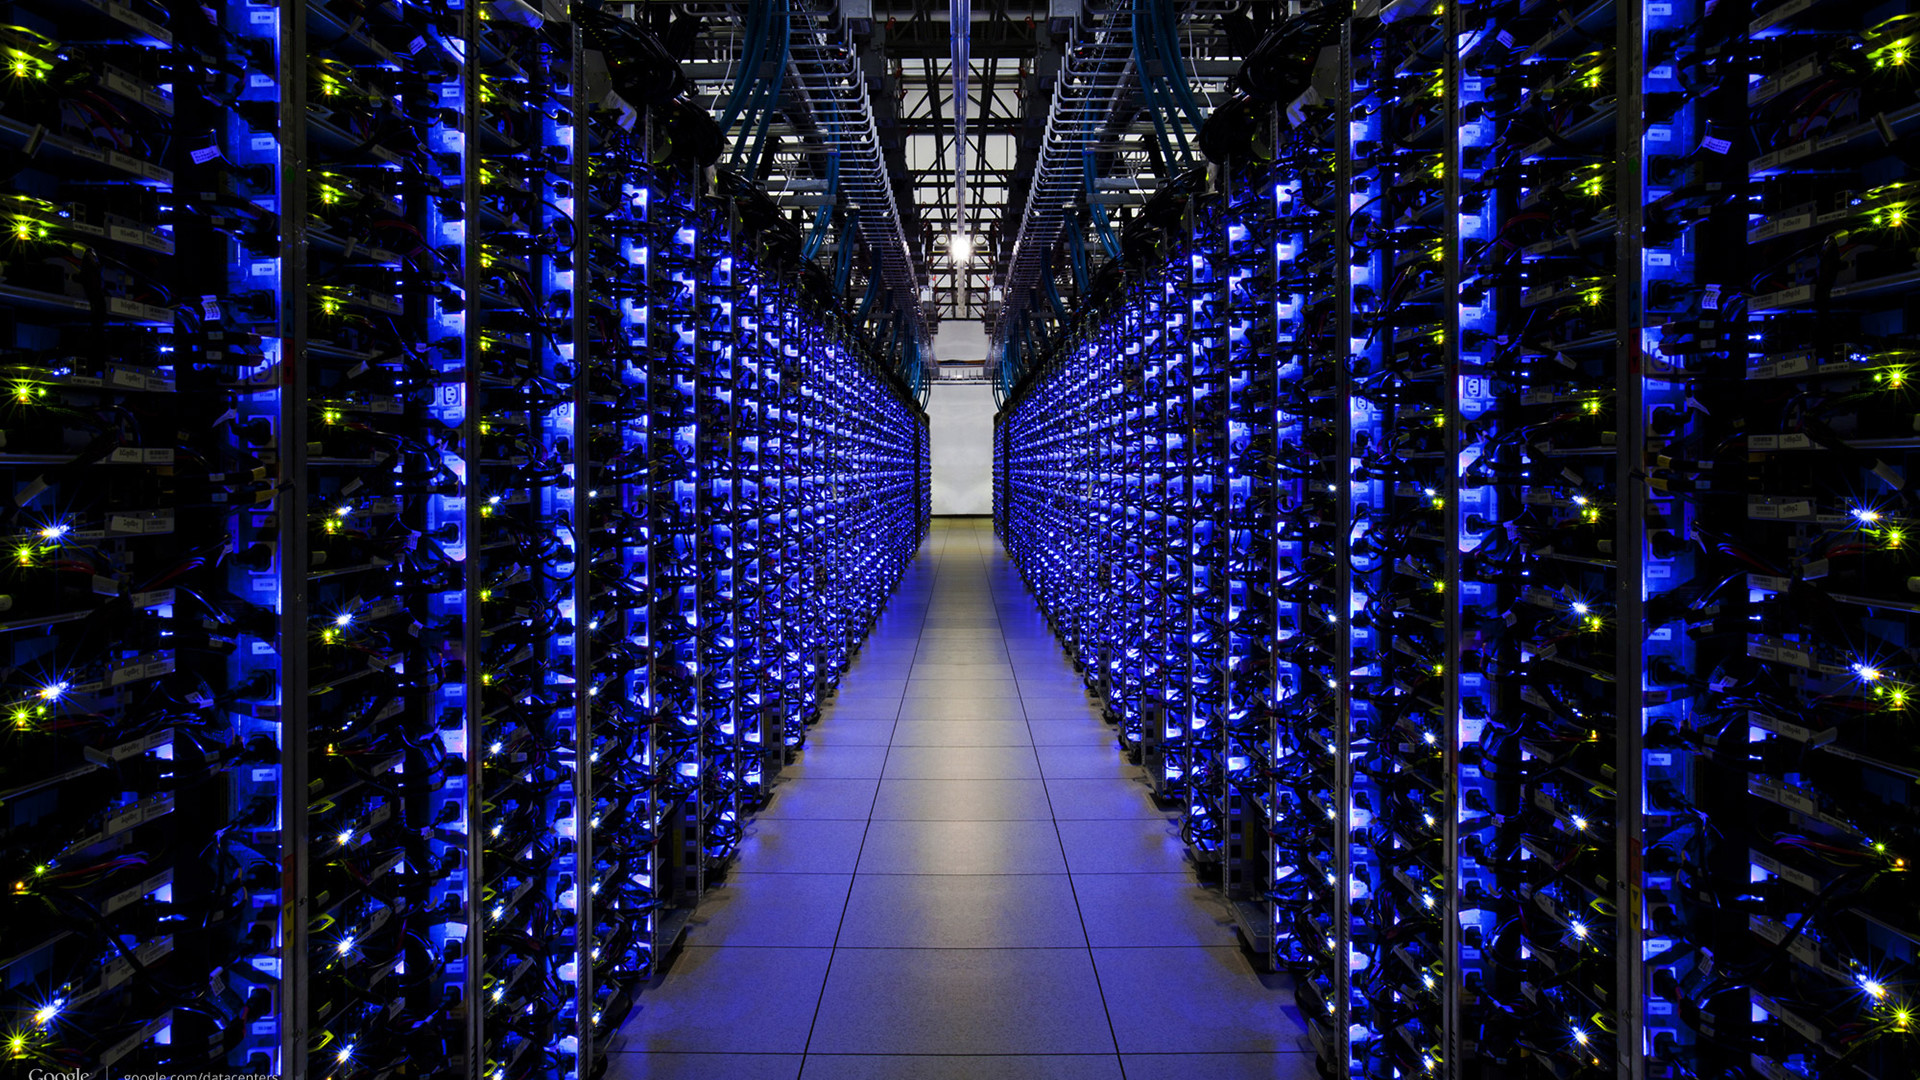 Server Room Of Google - 1920x1080 Wallpaper 